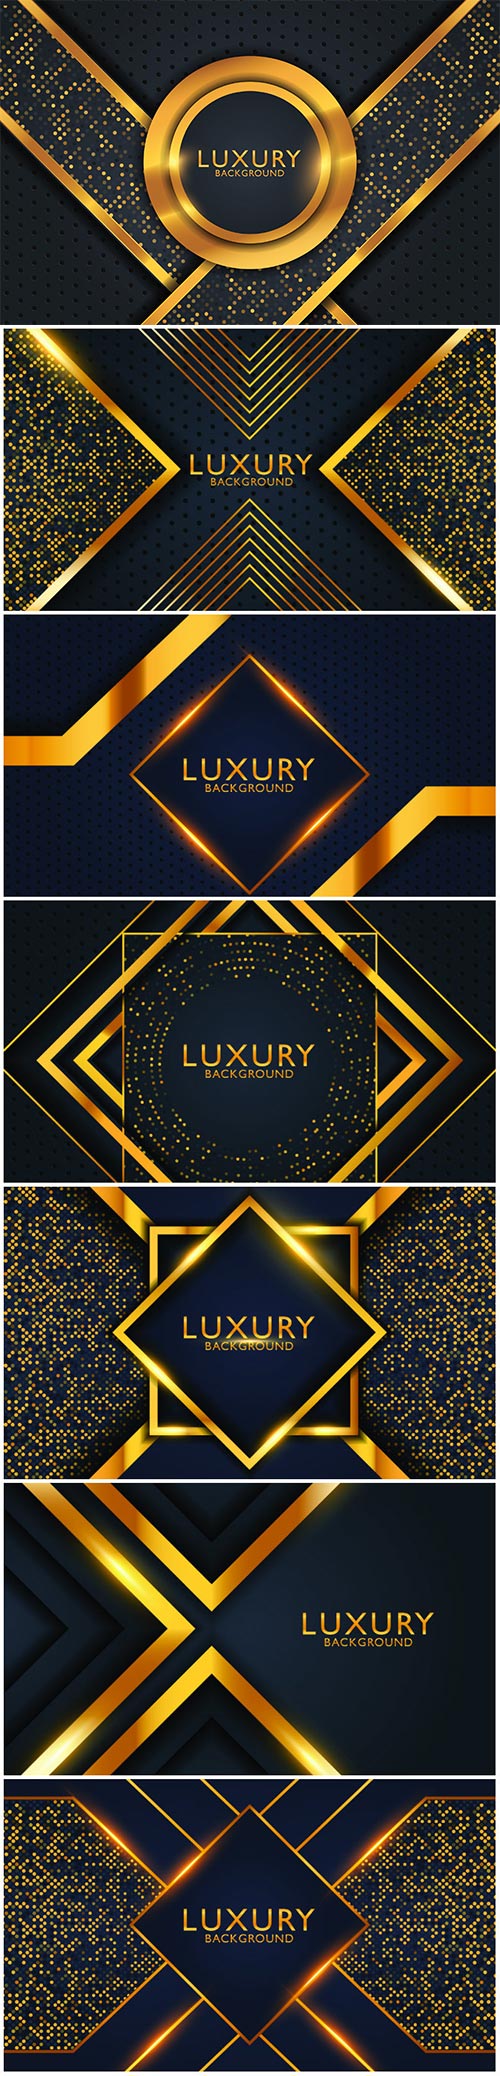 Geometric luxury gold metal background. Graphic design element for invitati ...